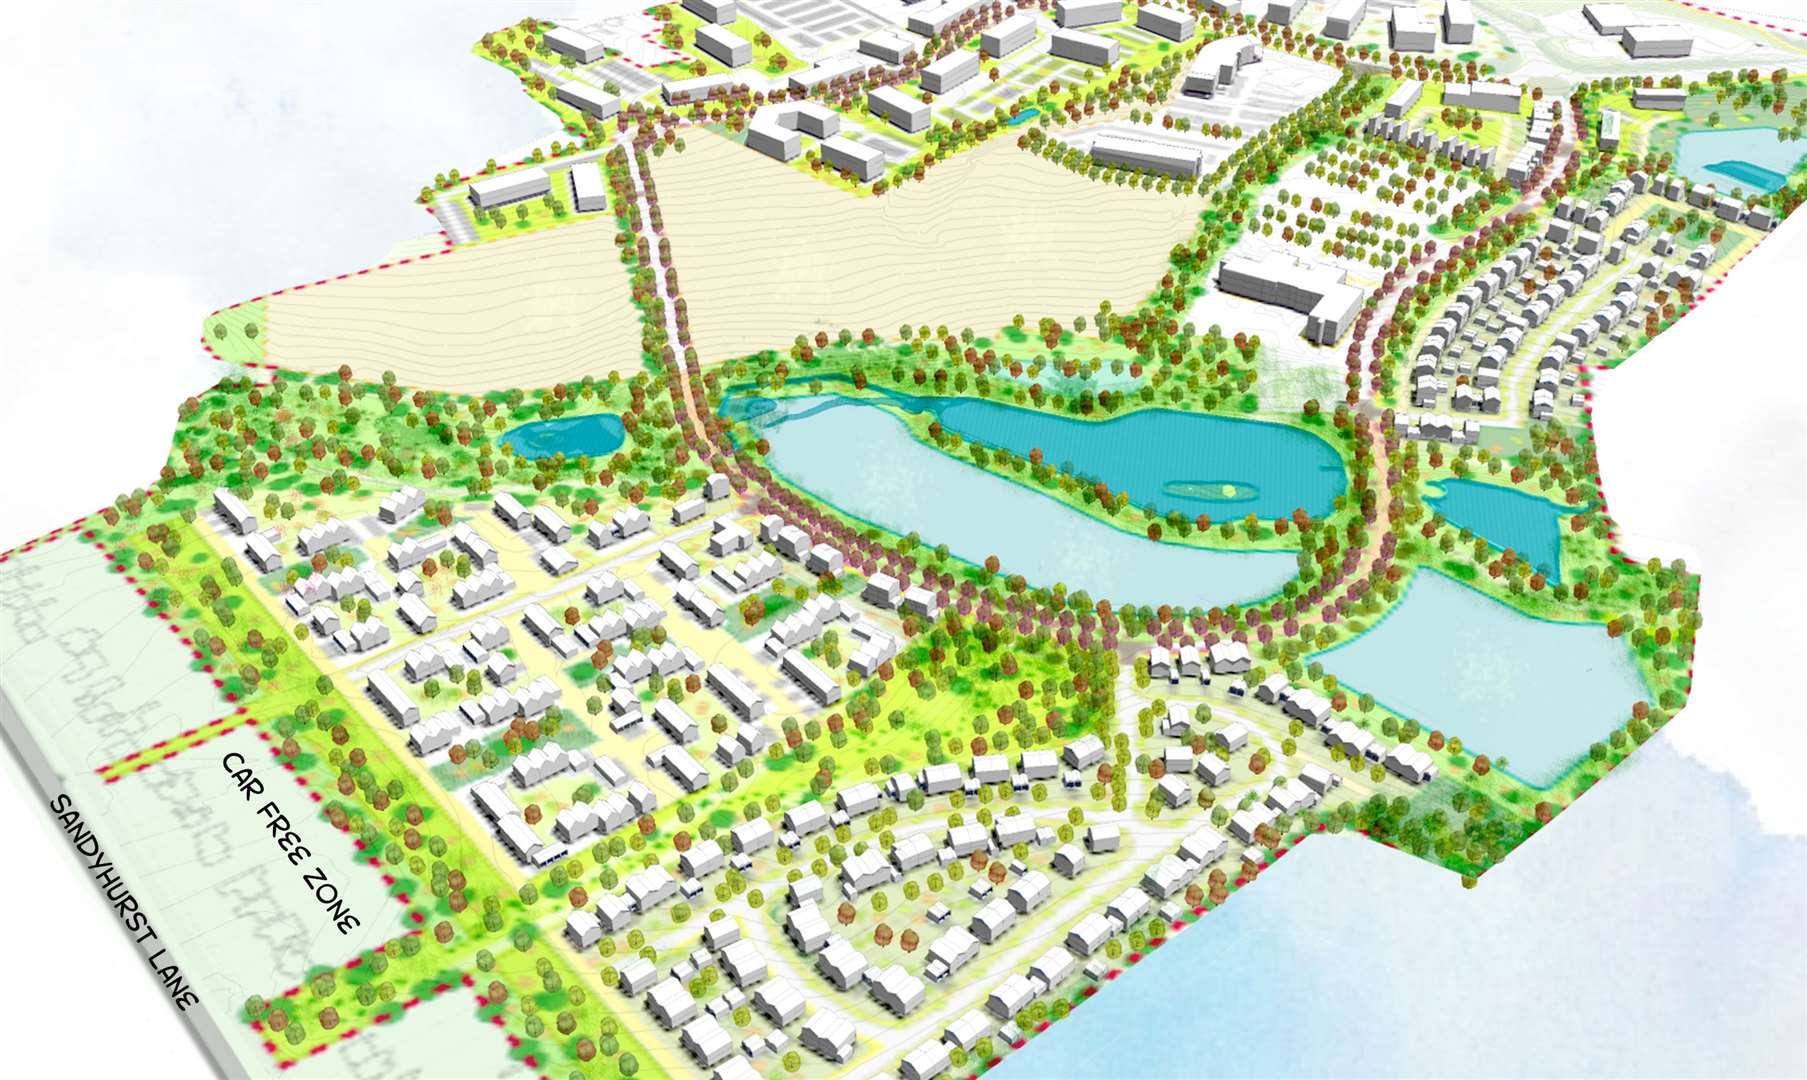 The proposed Trinity Lakes development